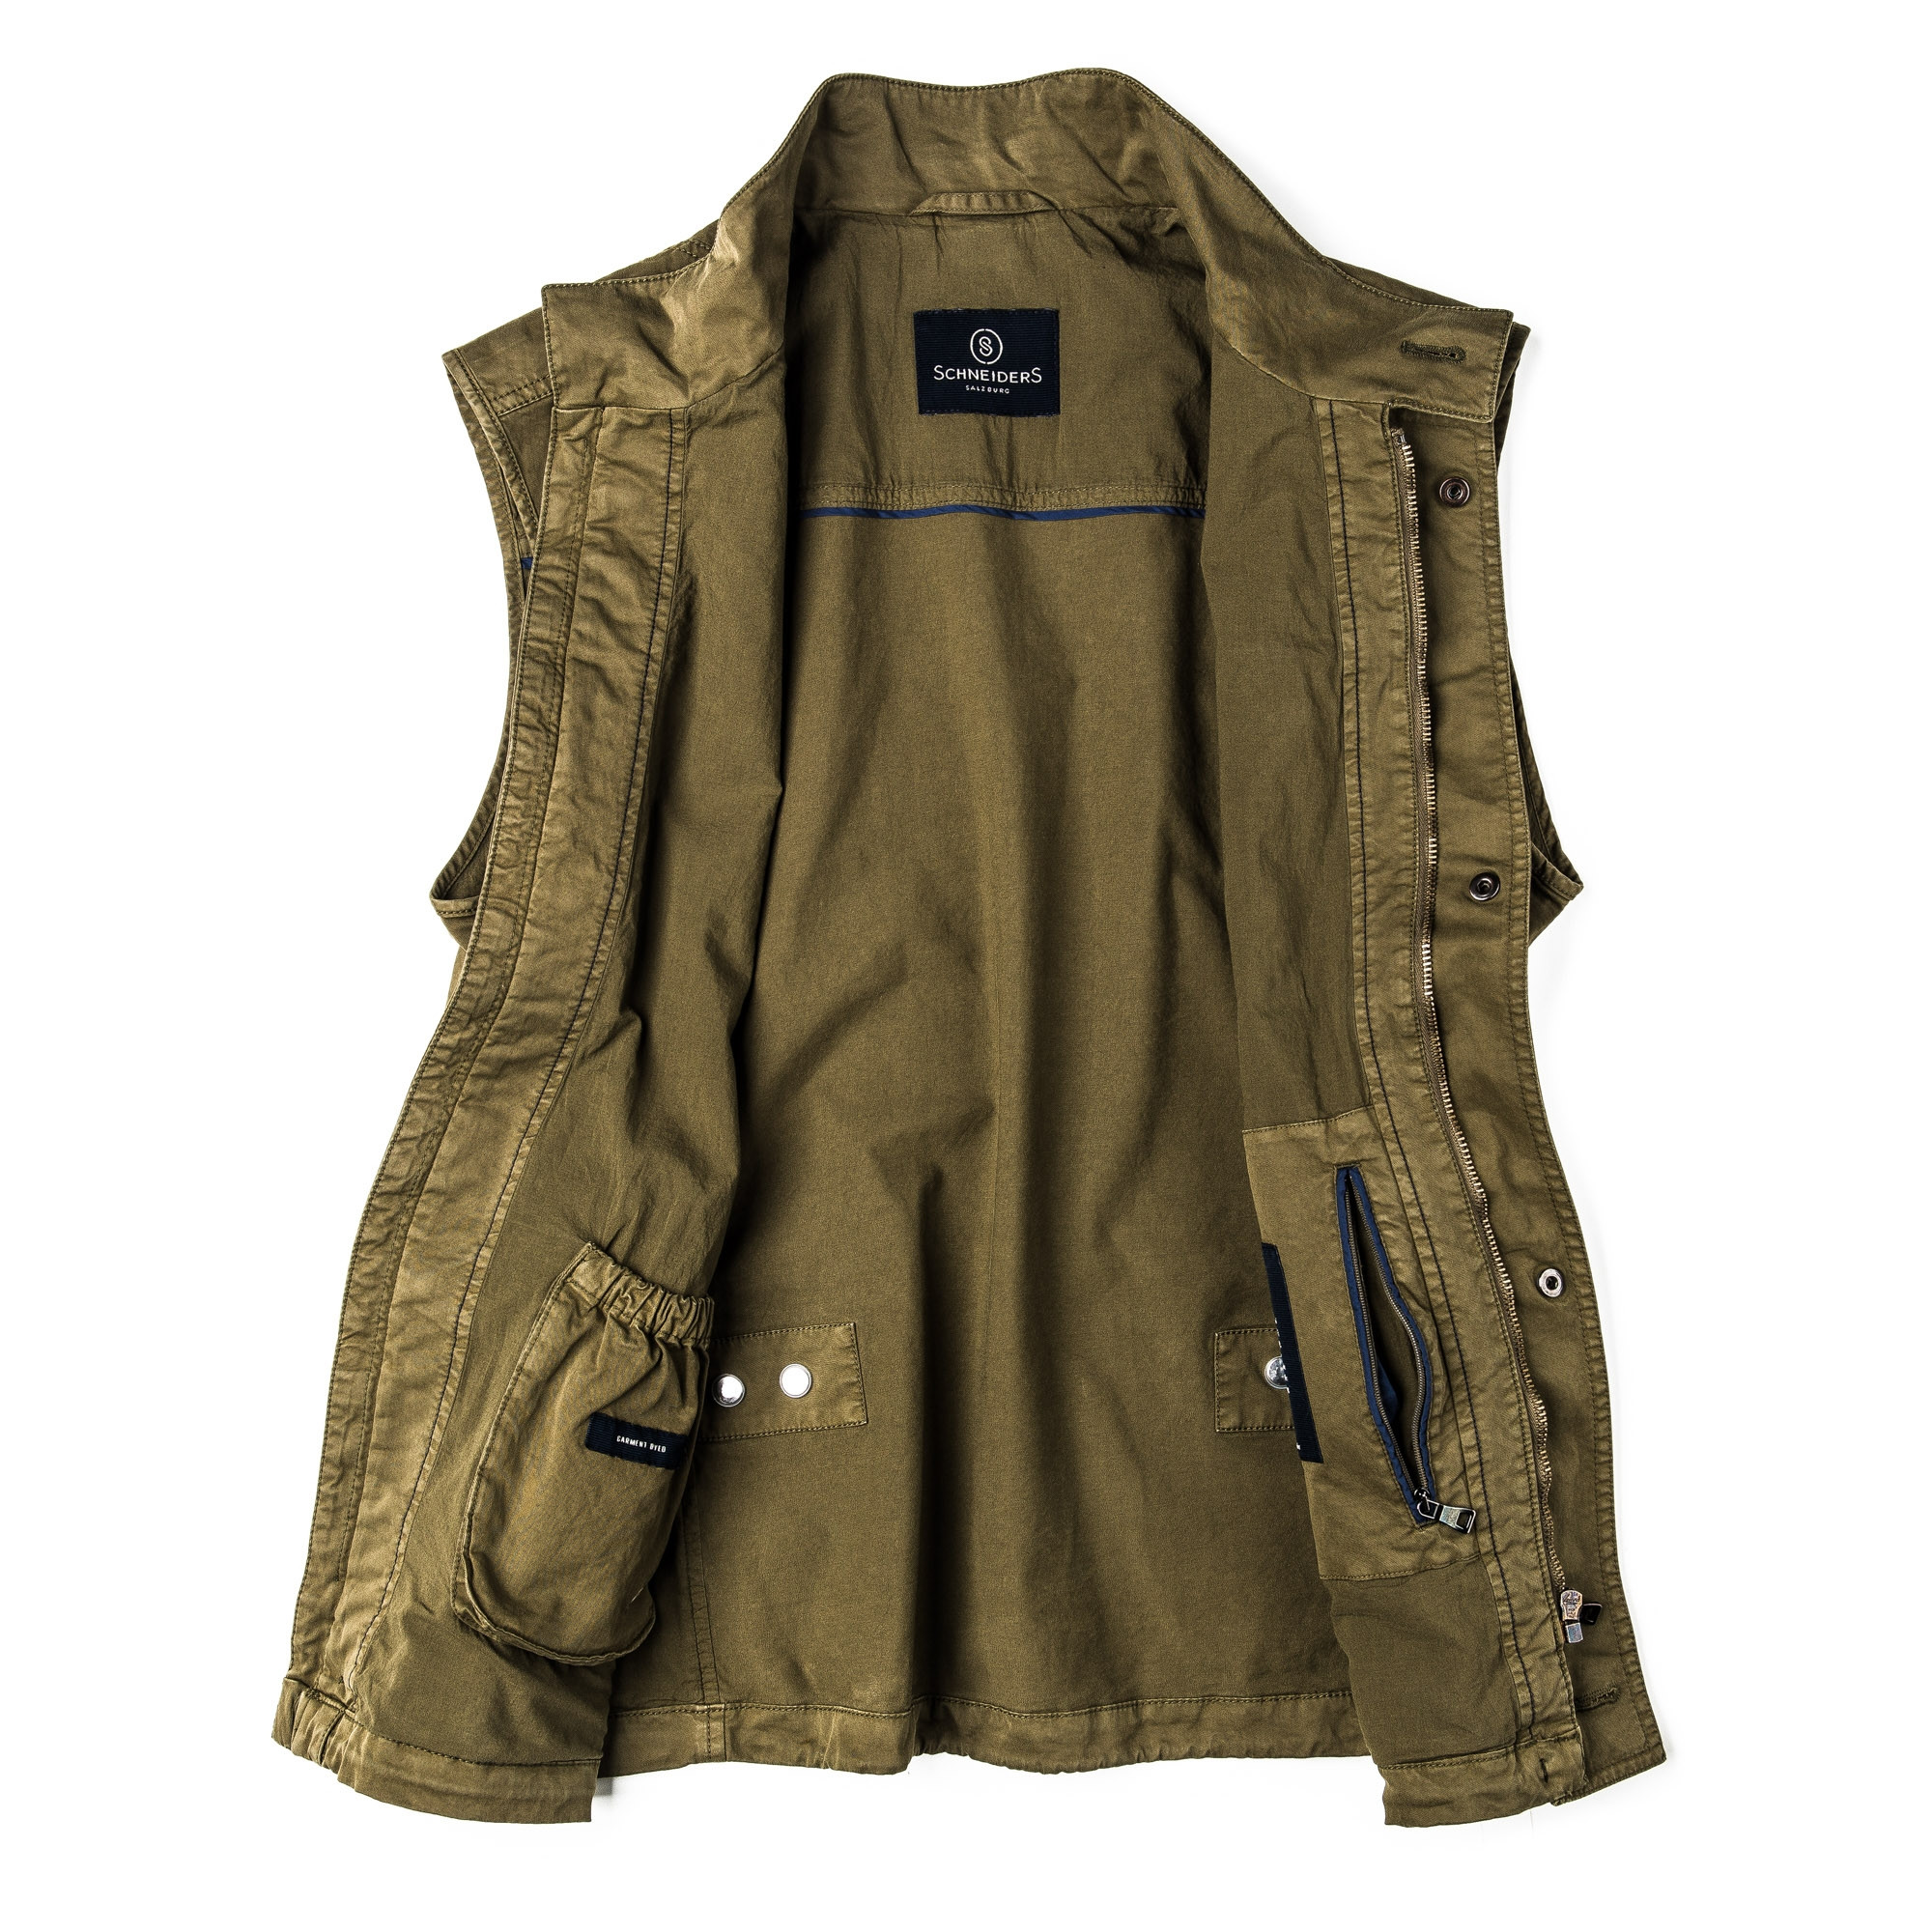 Schneiders - Men's Milan Garment Dyed Travel Vest - Green